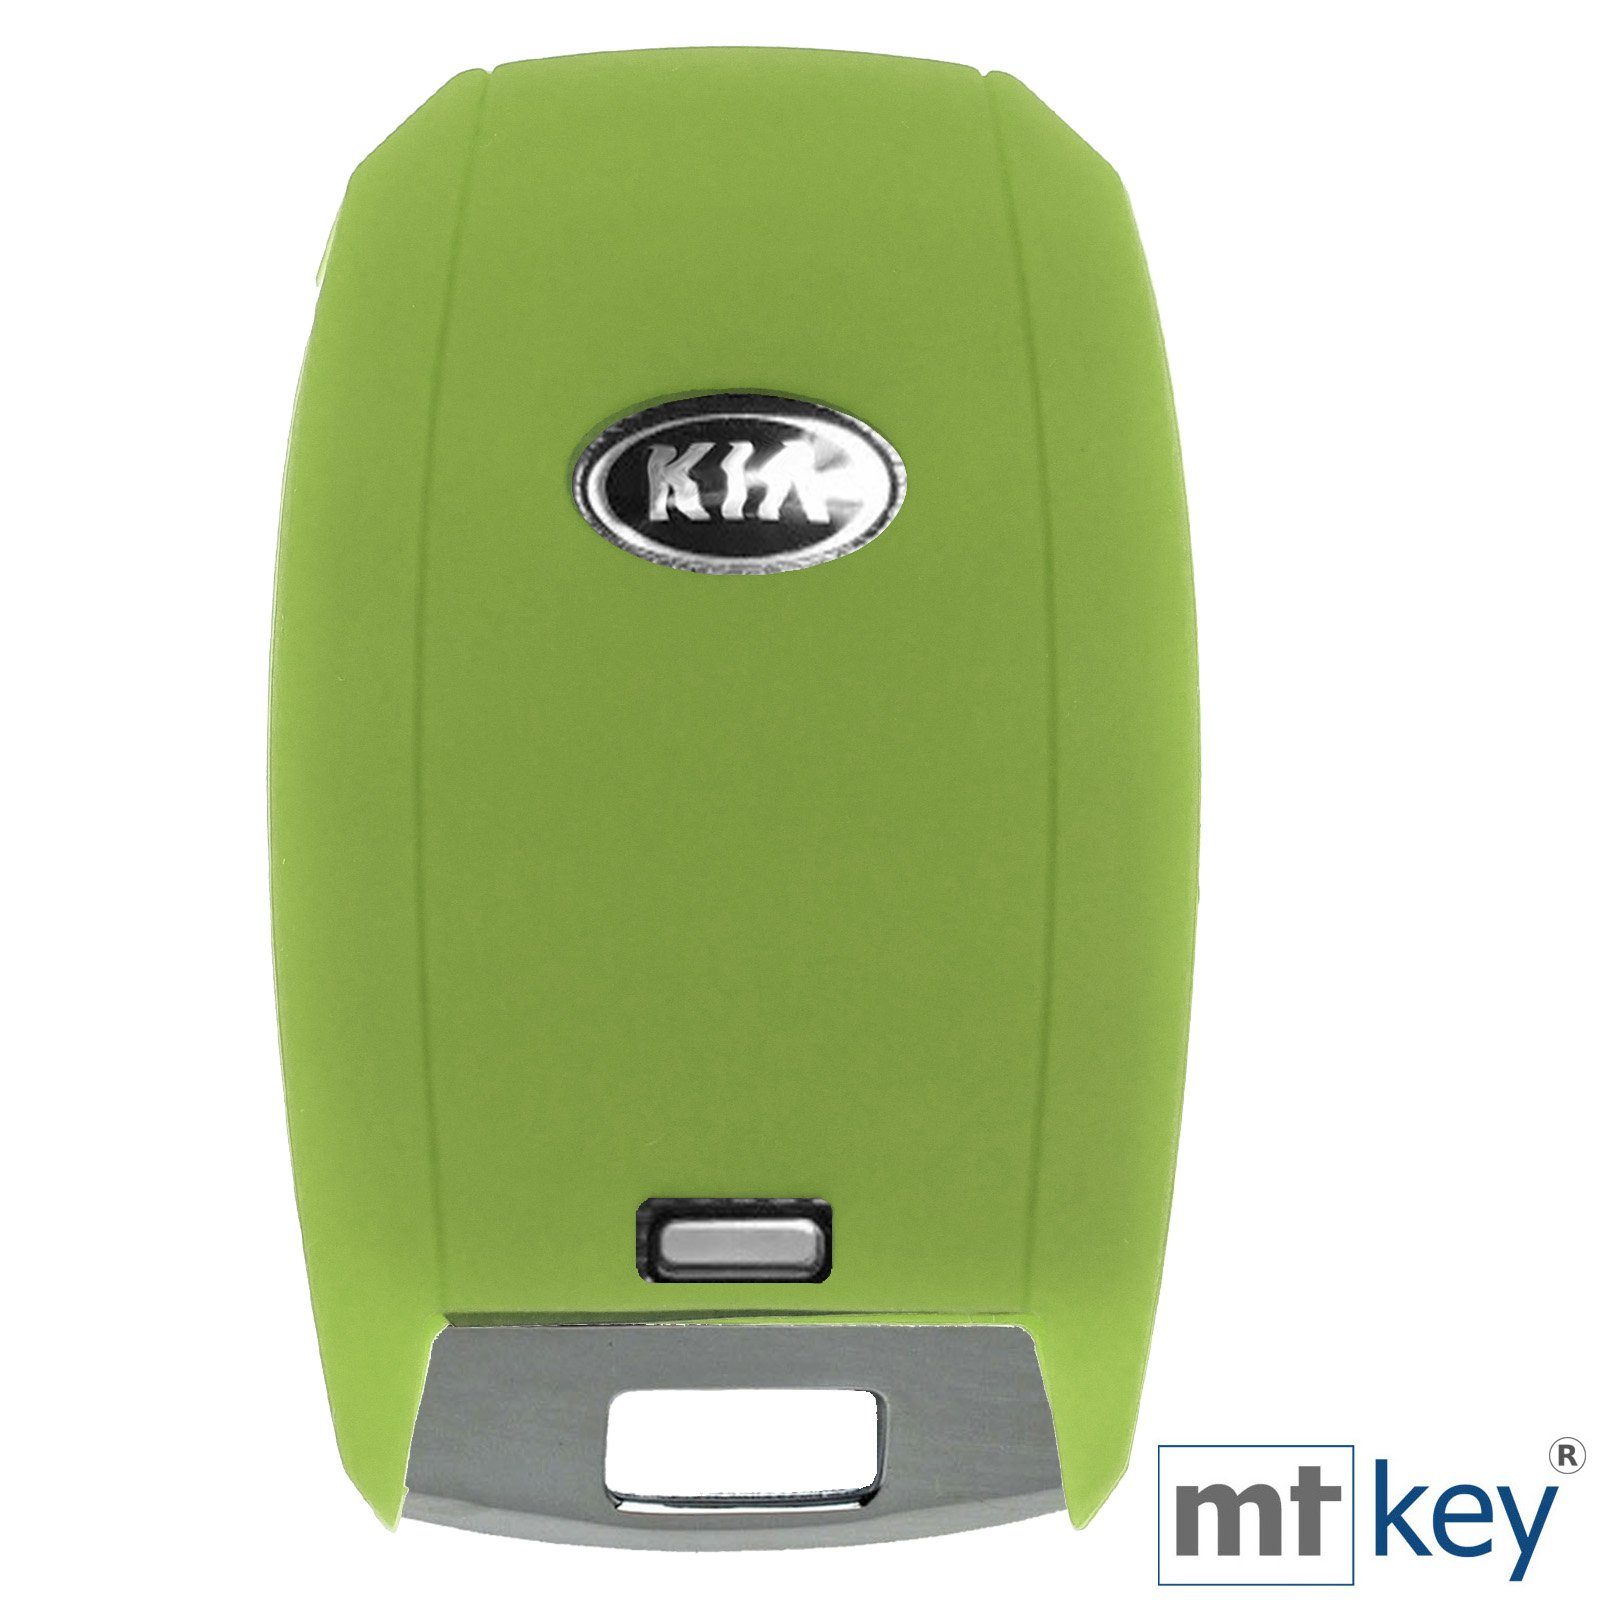 Picantio Stonic mt-key Schutzhülle Autoschlüssel Schlüsseltasche Ceed KIA KEYLESS Tasten Soul 3 Softcase Rio Sportage Grün, fluoreszierend Silikon für